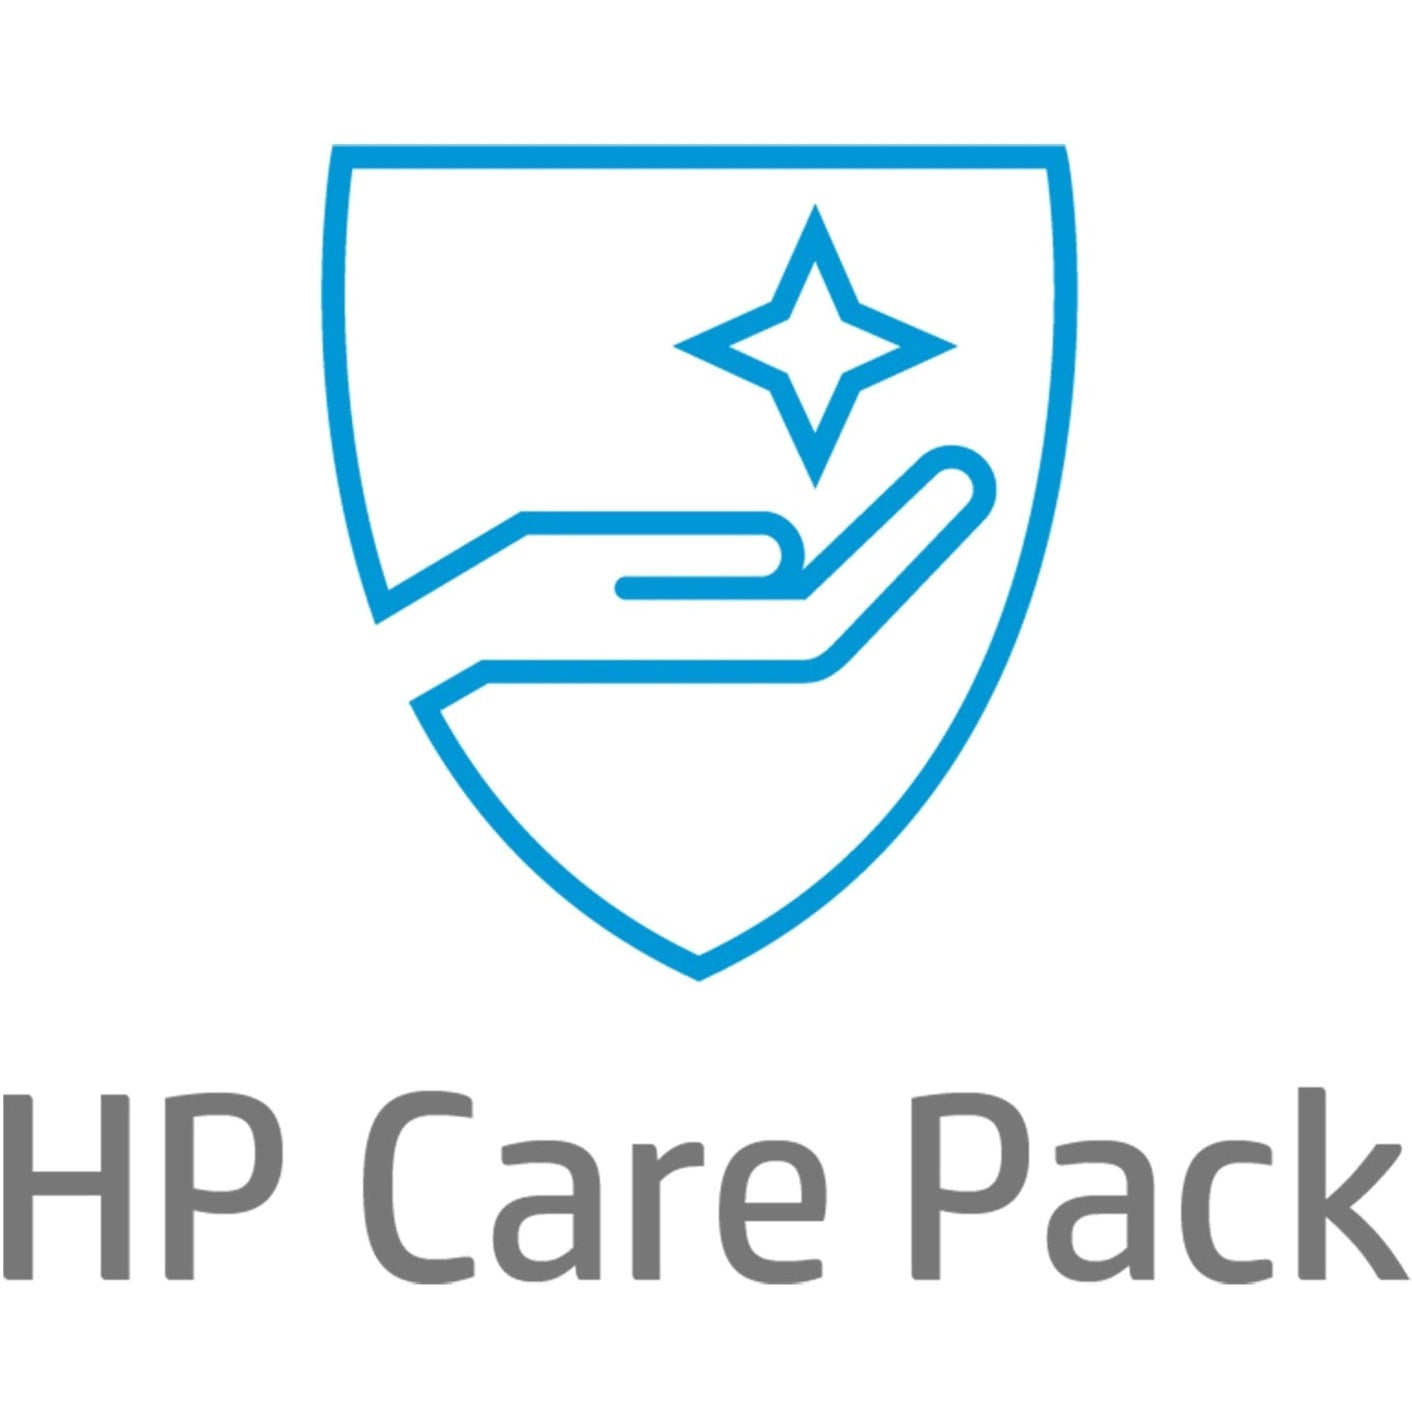 HP Care Pack - 4 Year - Warranty (U9WV9E)